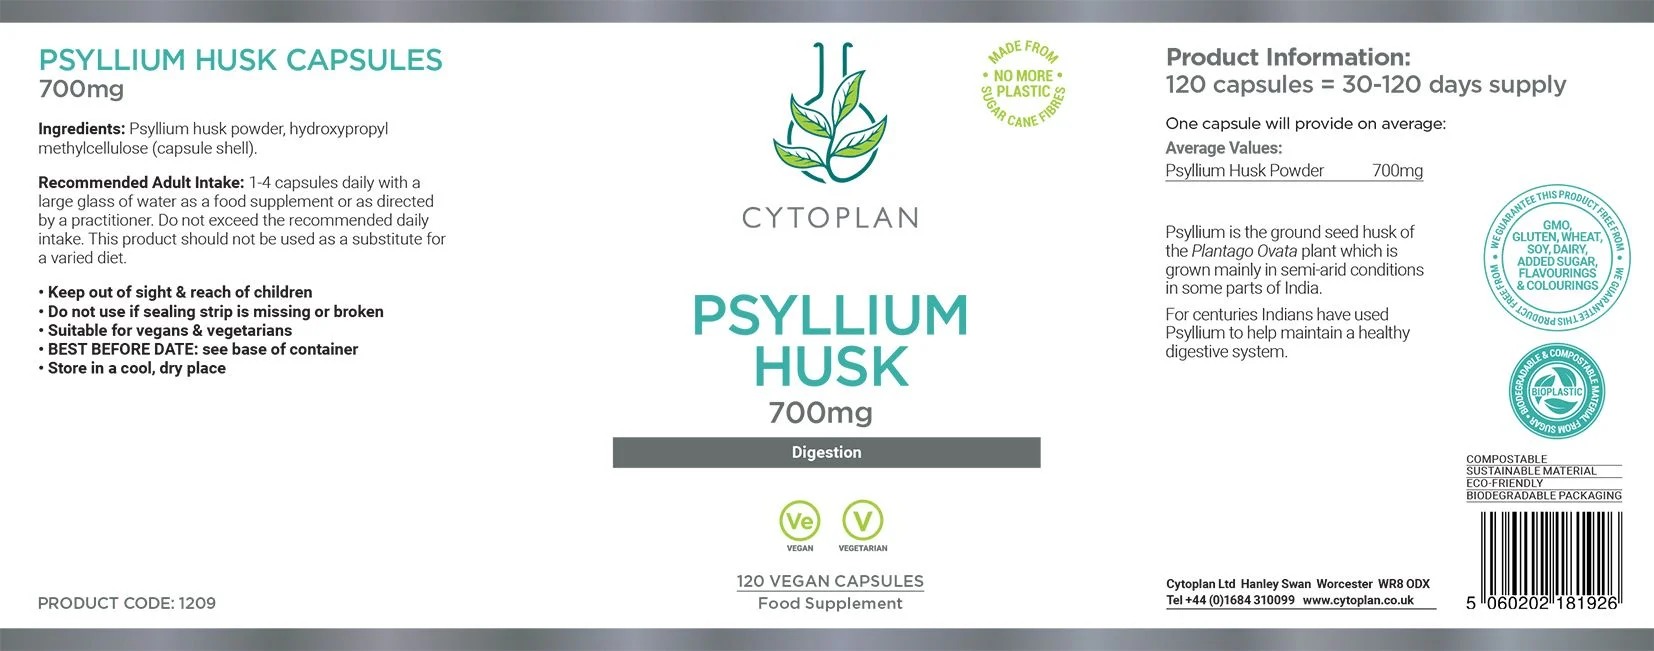 CYTOPLAN PSYLLIUM HUSK EHK INDIA TEELEHT (Plantago ovata) 700MG TOIDULISAND.webp